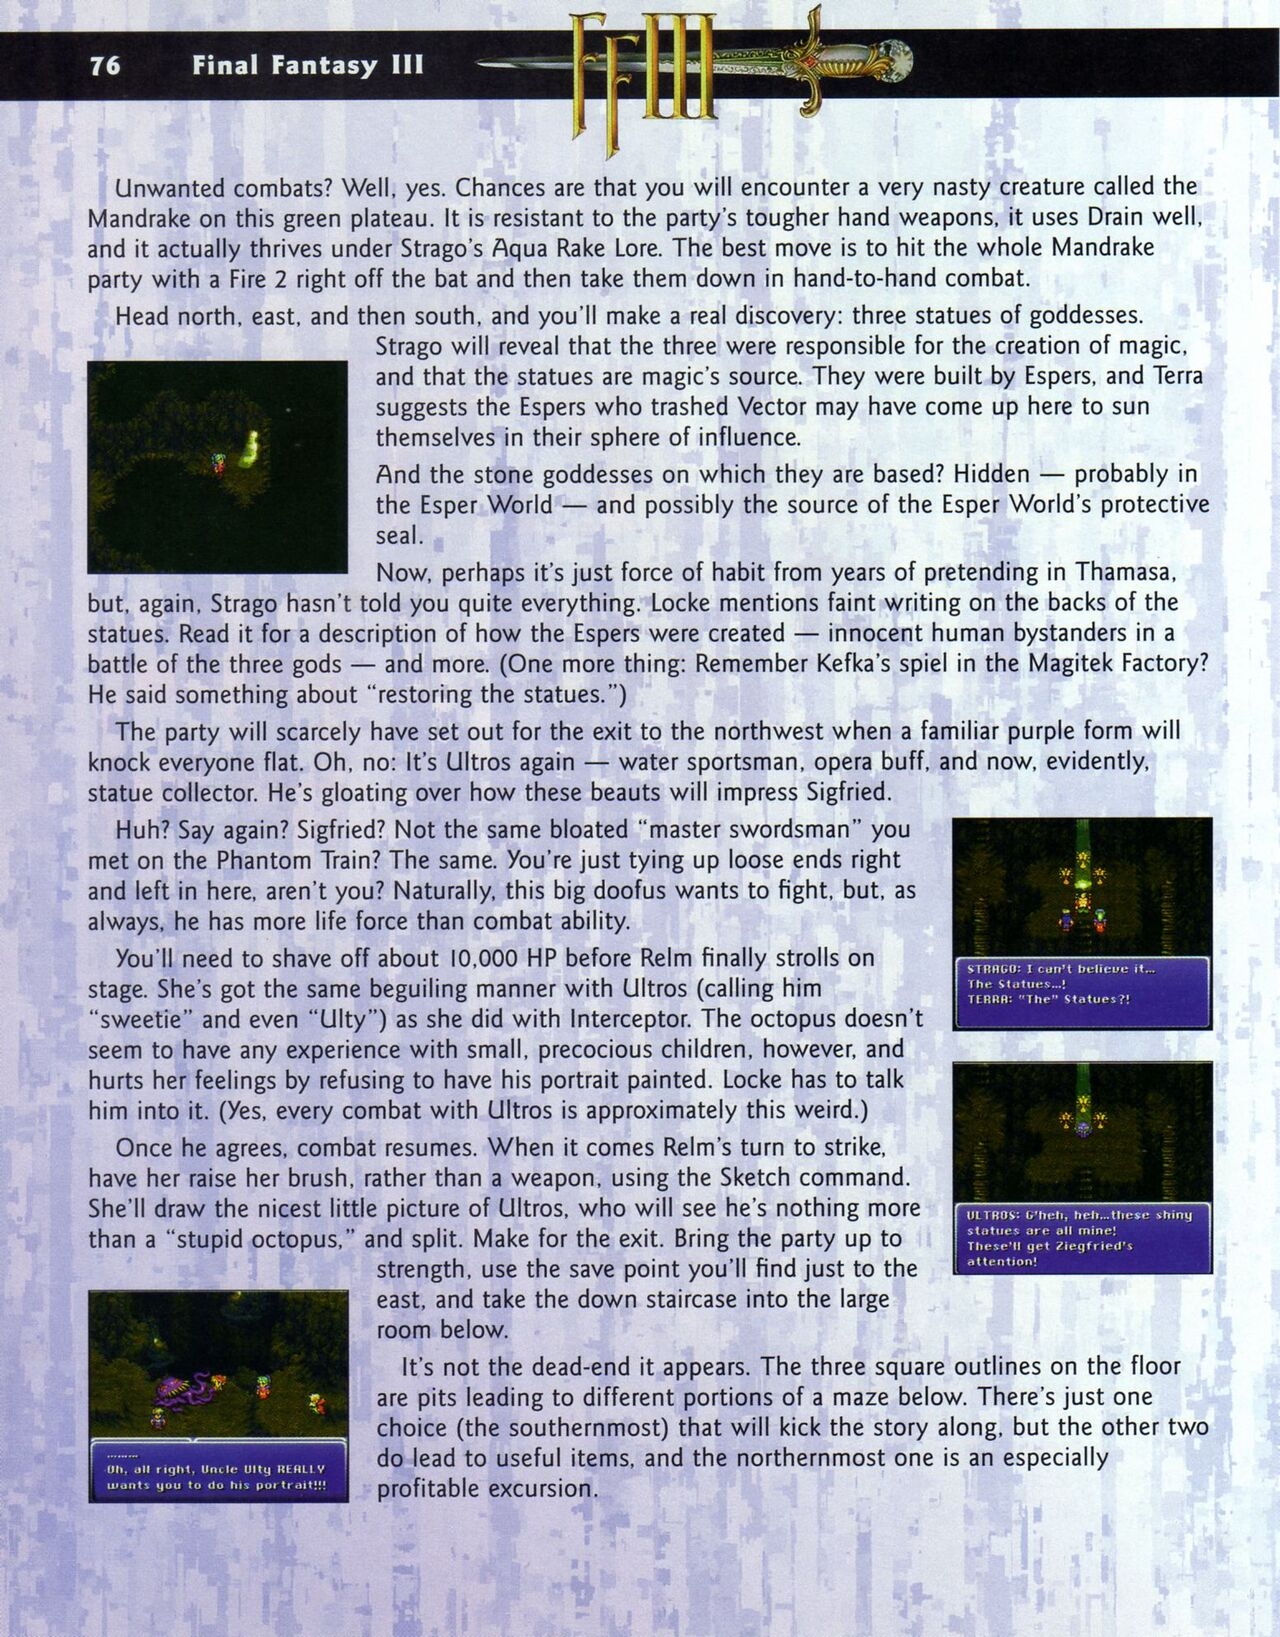 Final Fantasy III Players Guide 93